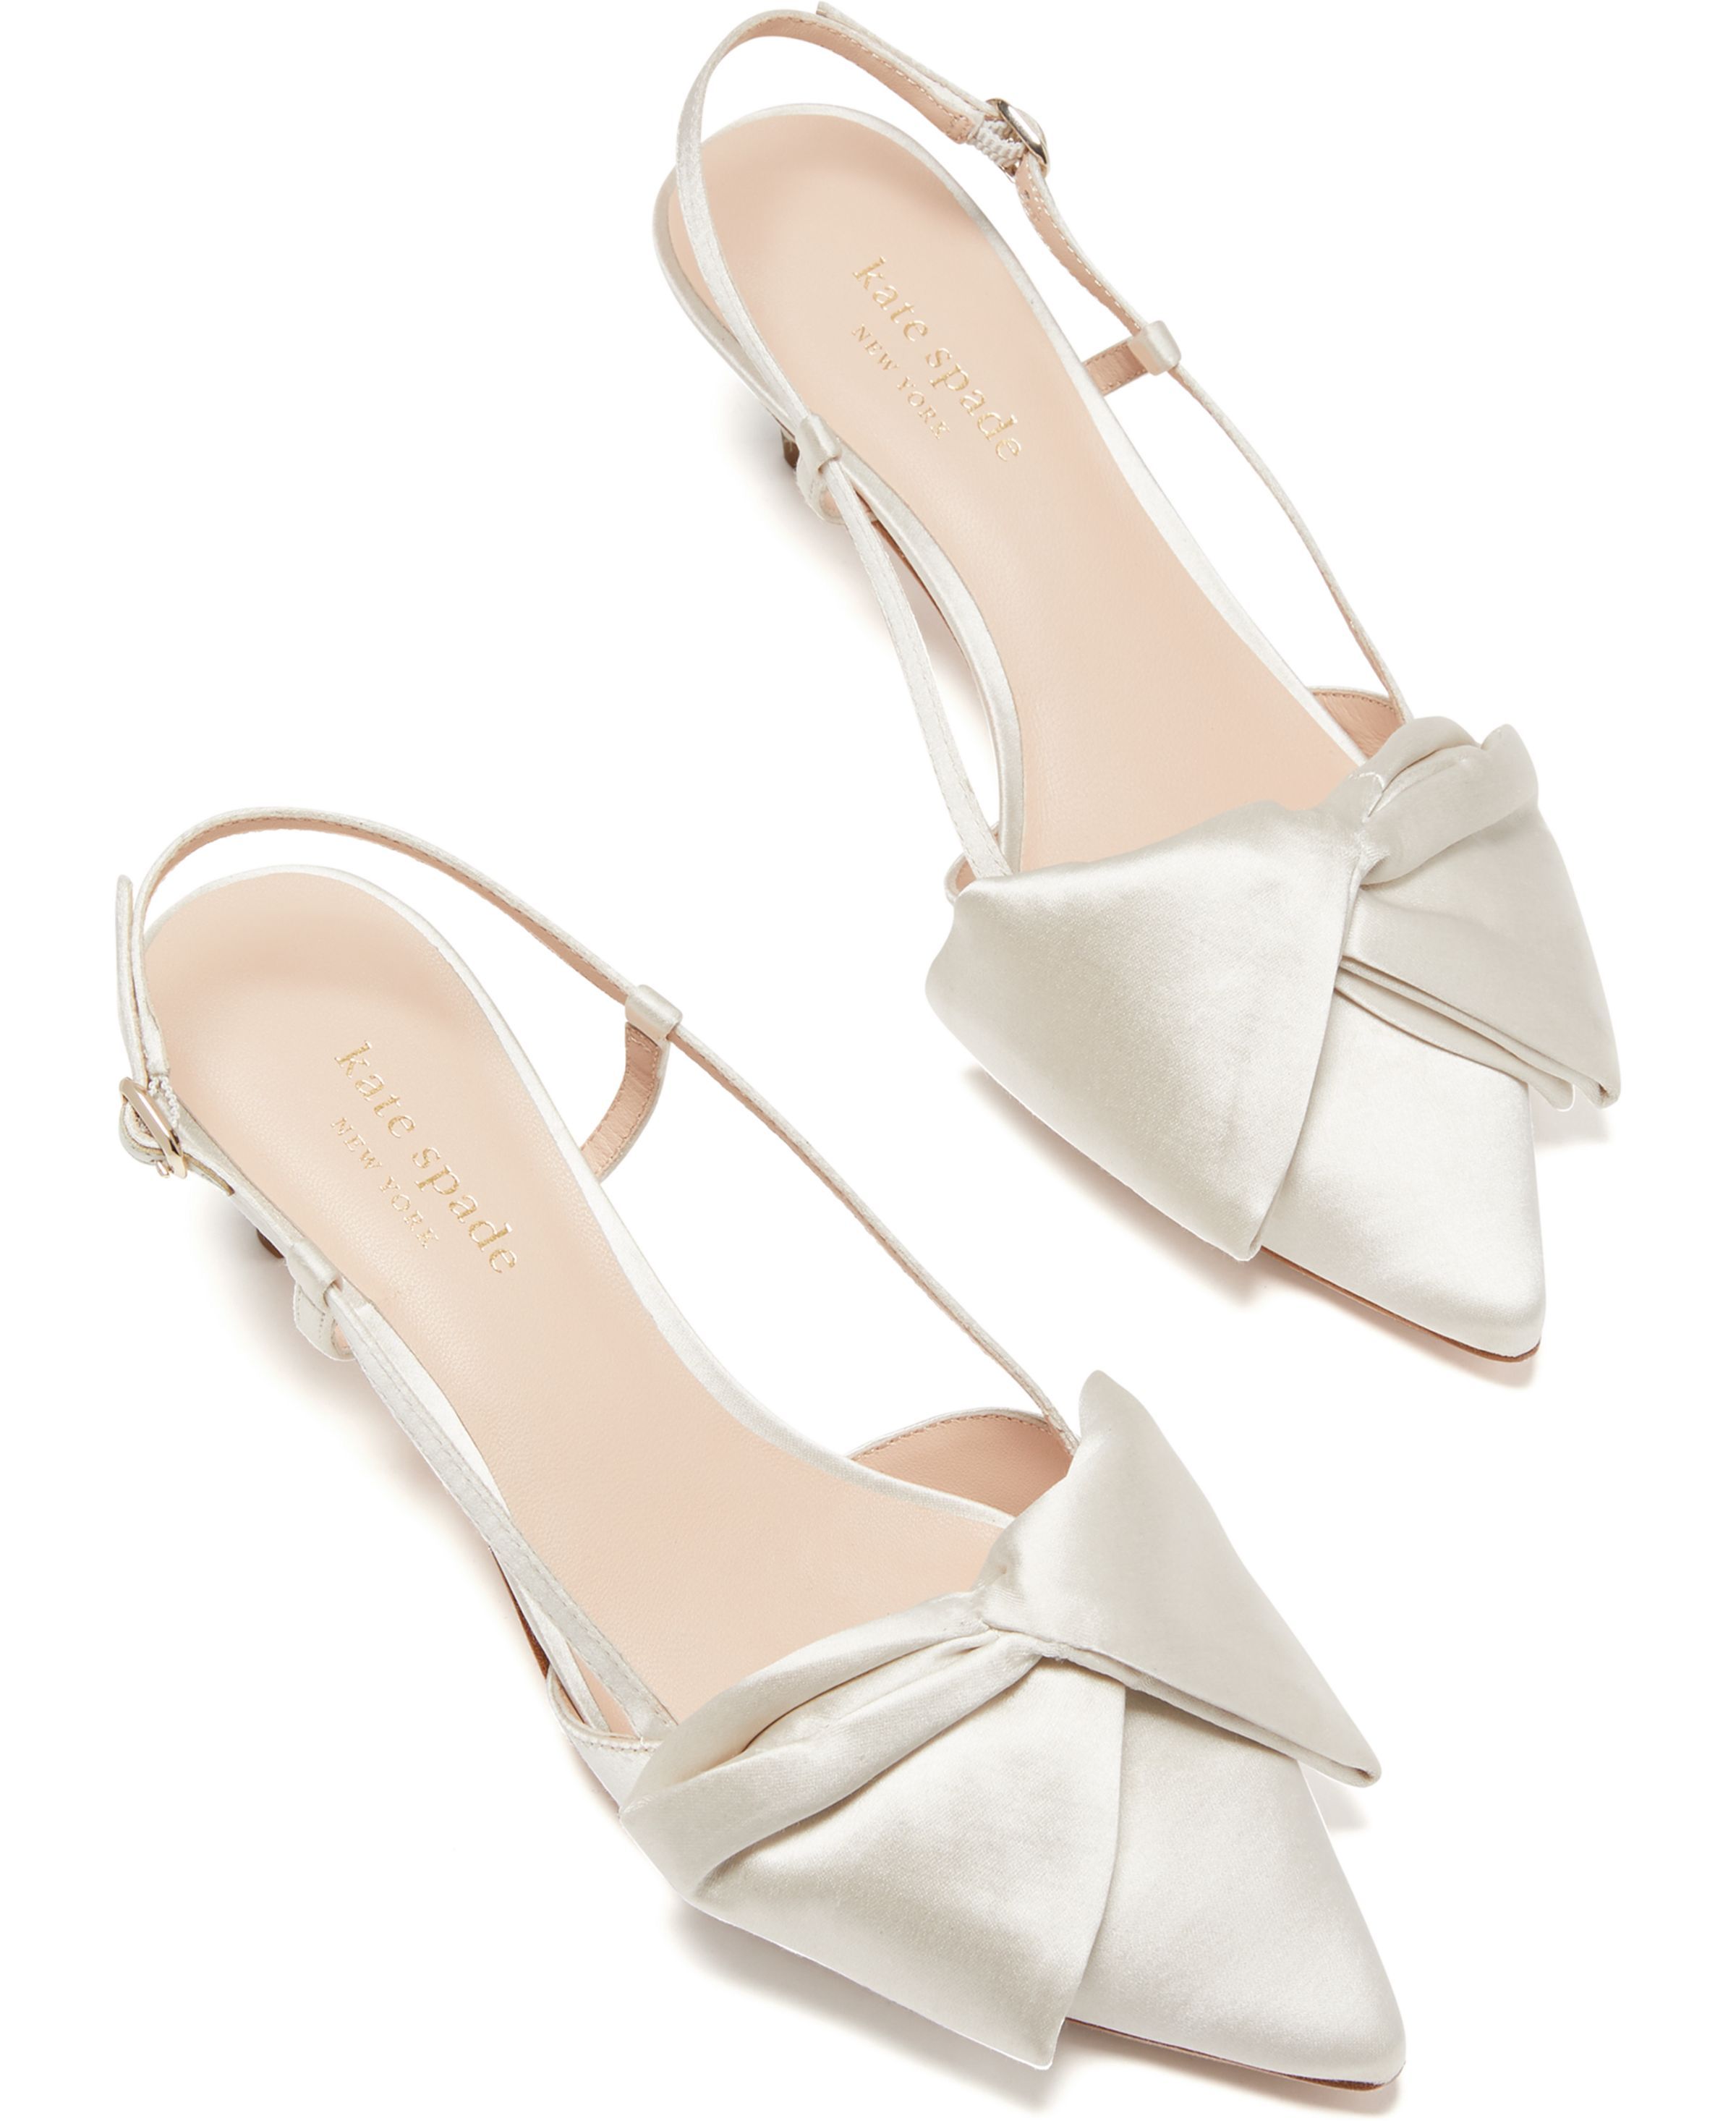 Kate Spade NeYork Women's Shoe Sz 7 (US Women's) Marseille Dress Pumps White